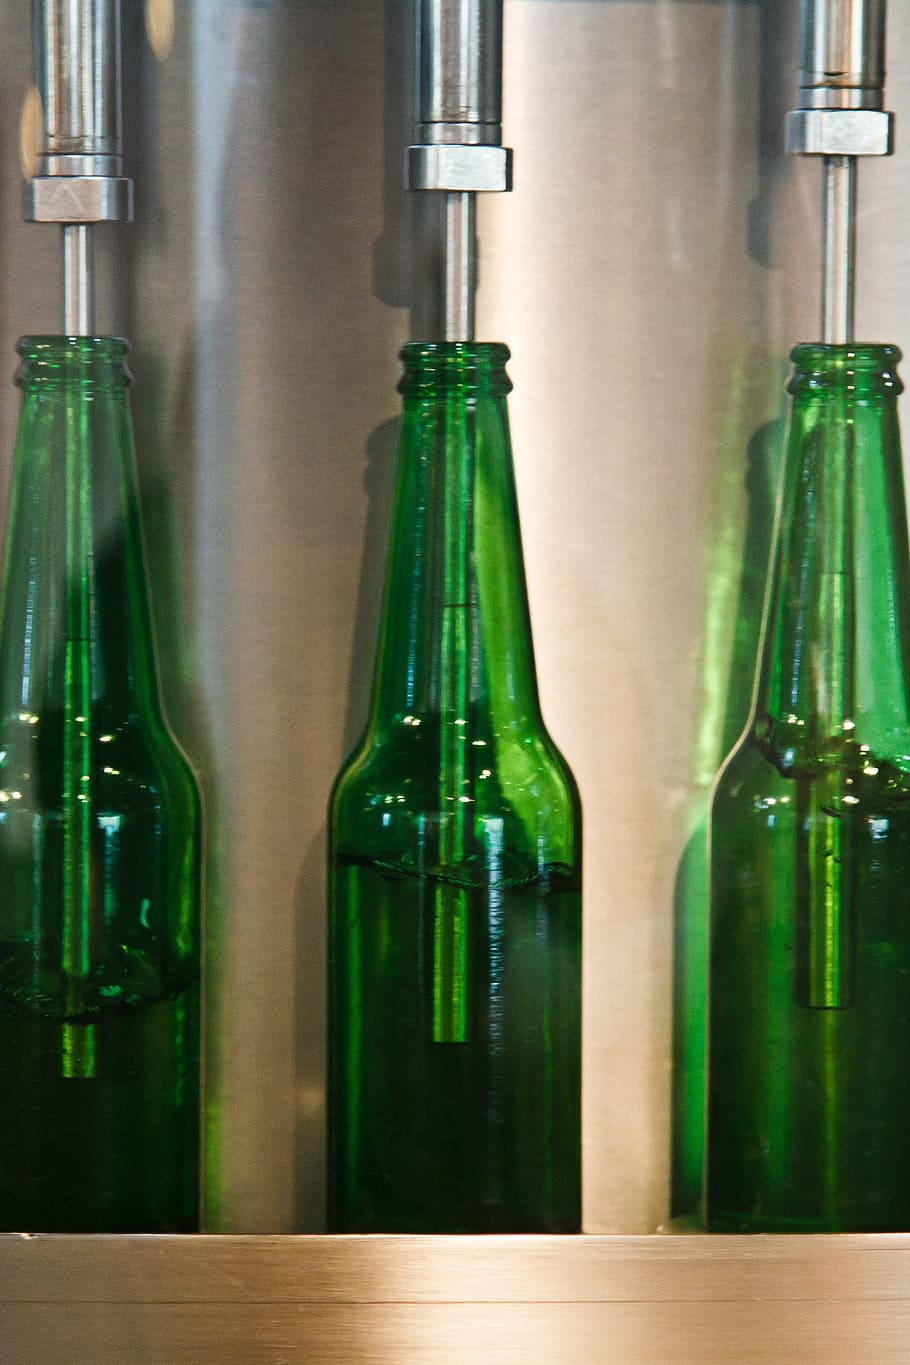 three, green, glass bottles, Beer, Beverage, Bottle, Bottling, brewery, clean, drink